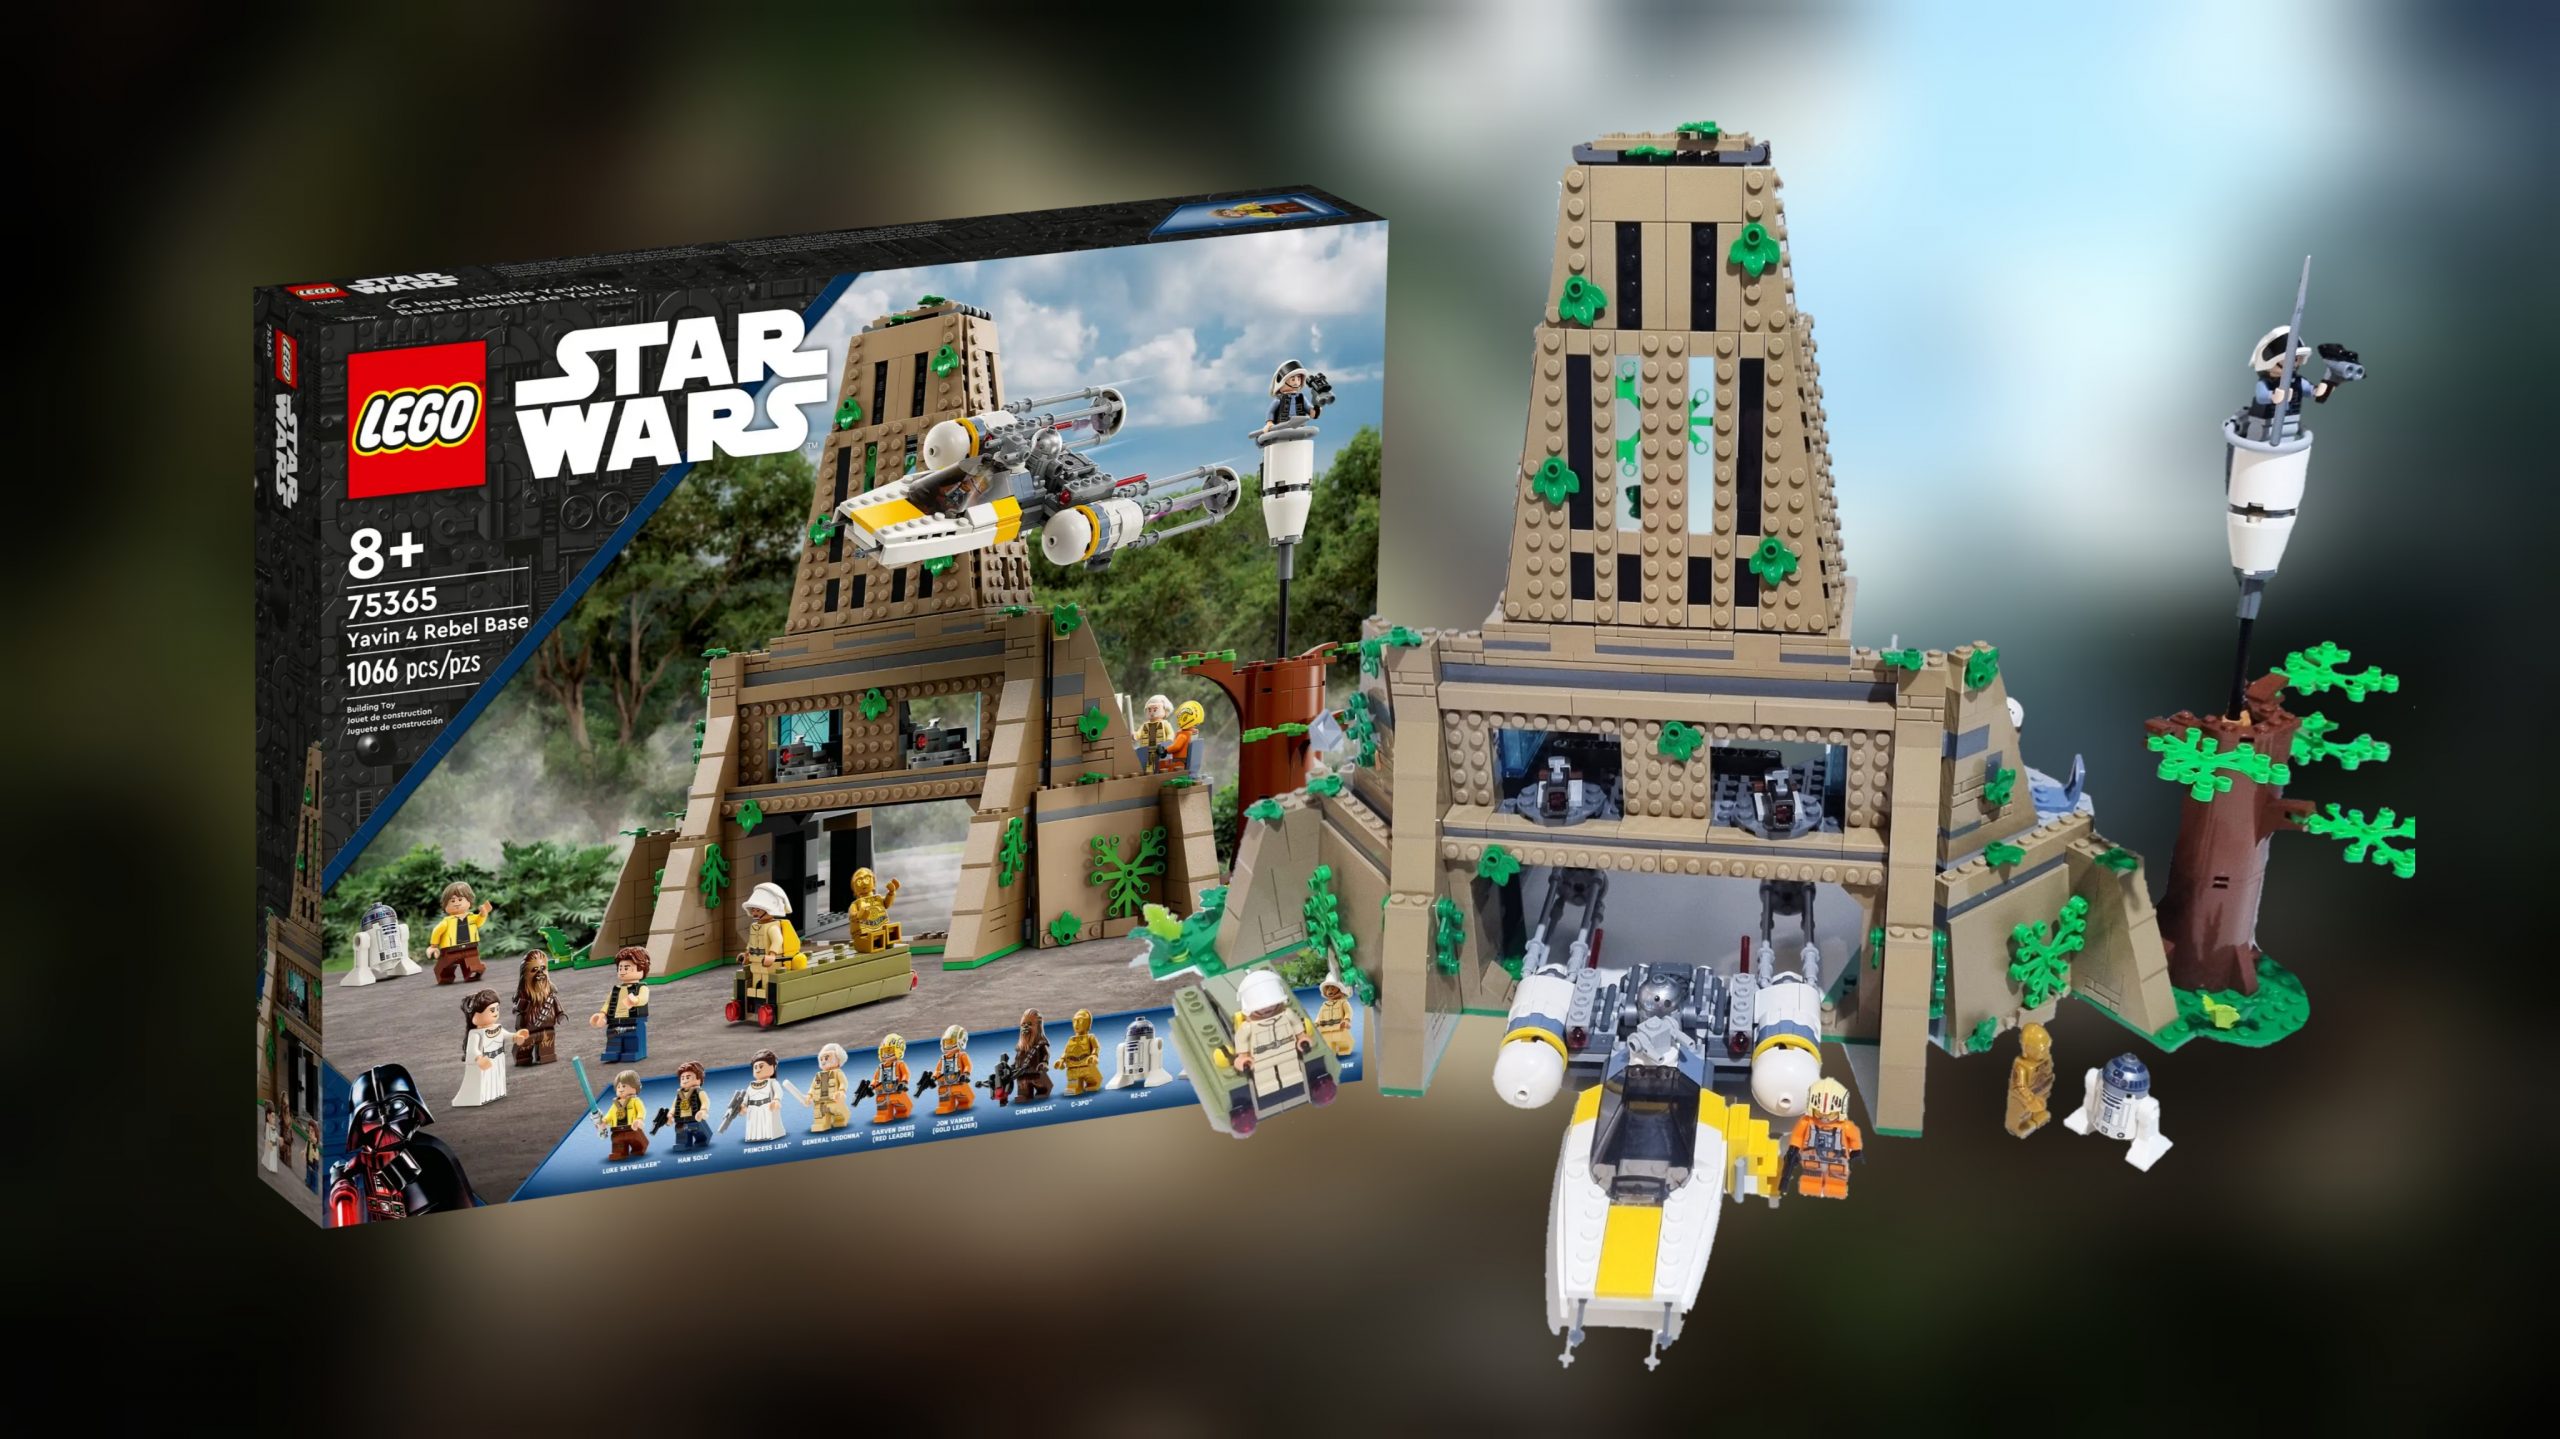 LEGO Star Wars 75365: Yavin 4 Rebel Base [Review] - The Brothers Brick